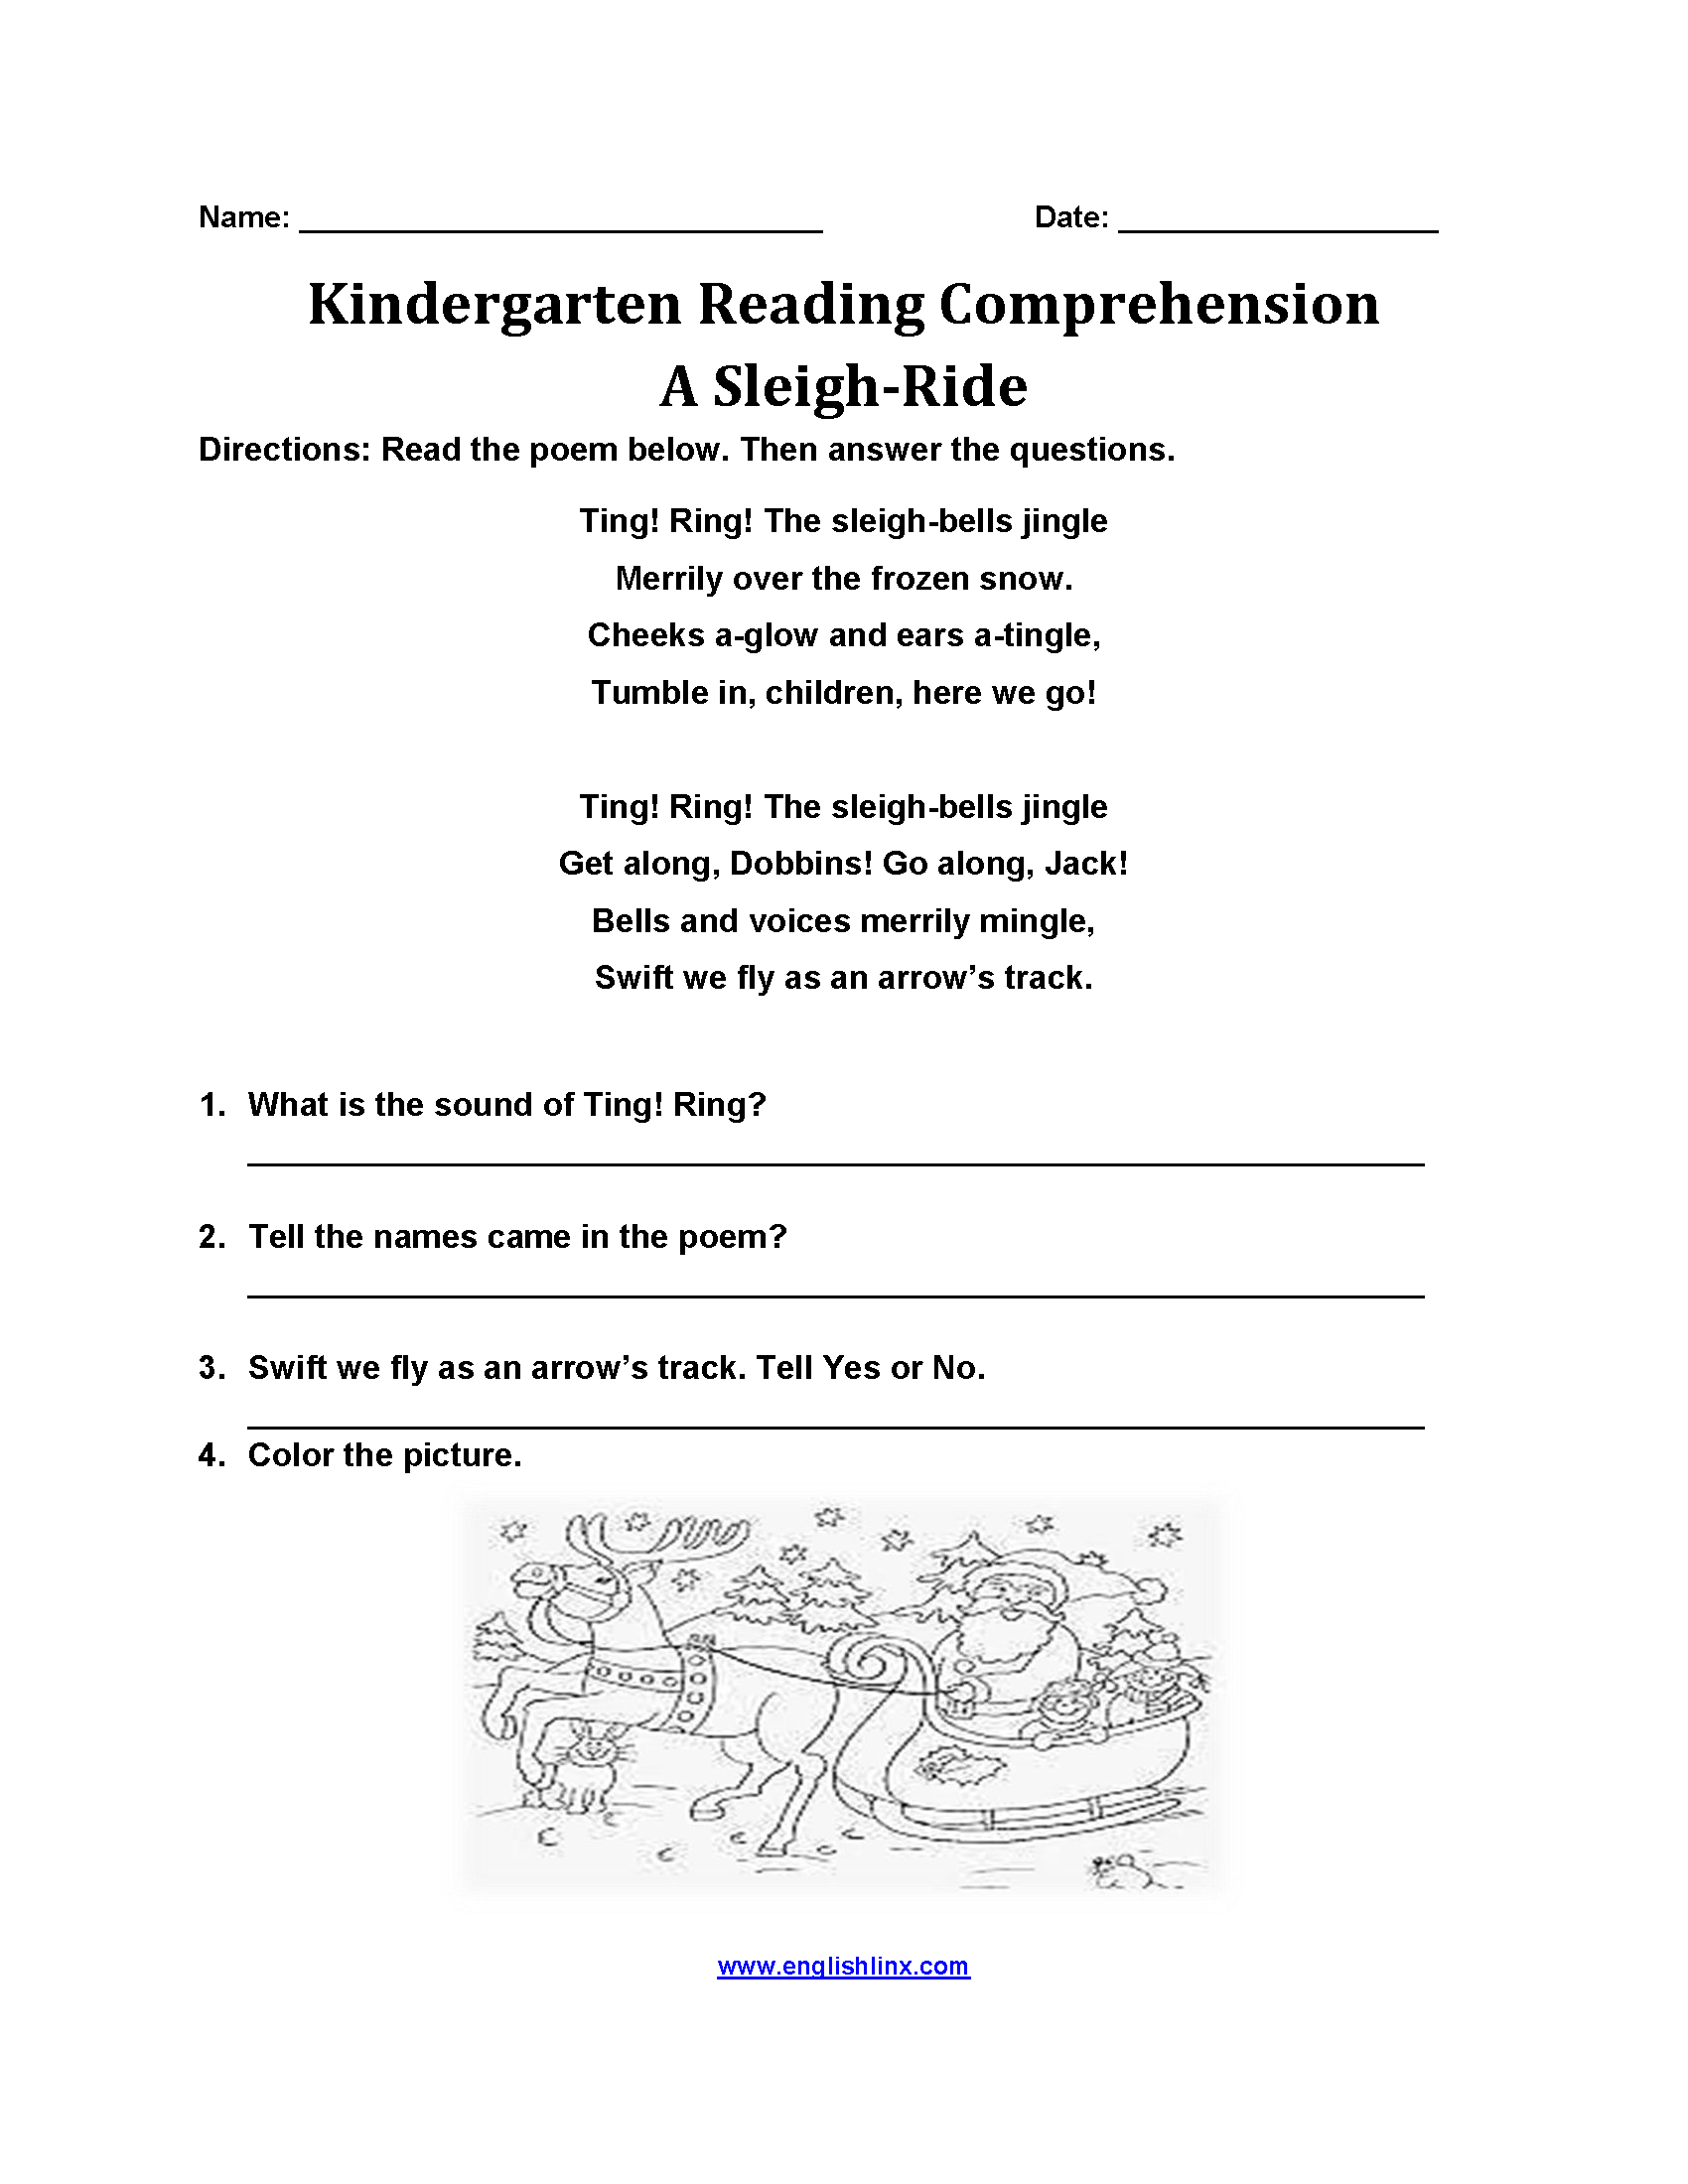 Sleigh Ride Kindergarten Reading Comprehension Worksheets